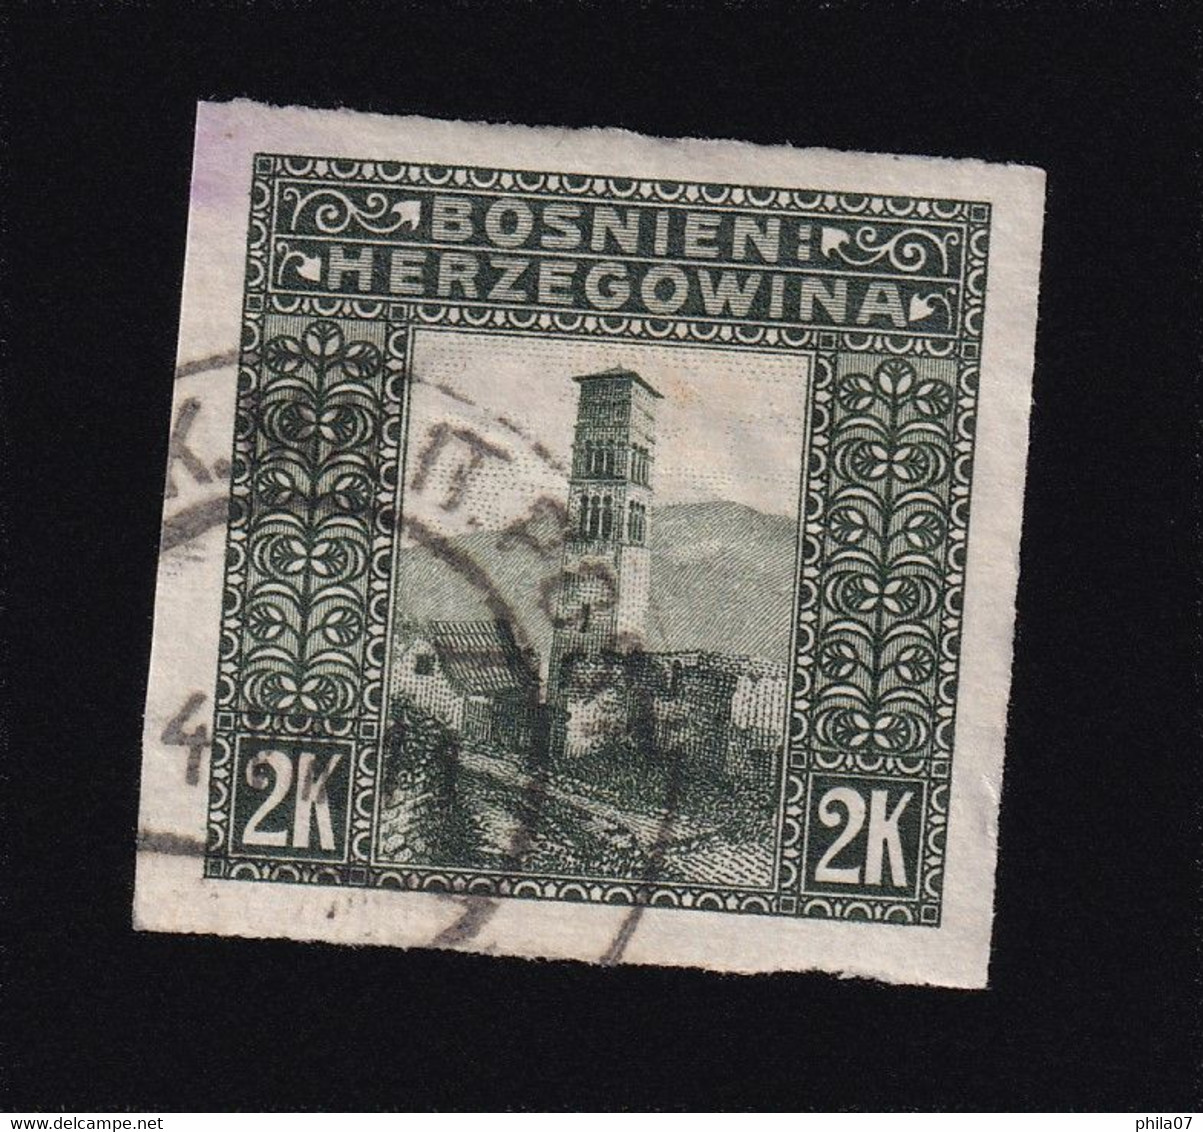 BOSNIA AND HERZEGOVINA - Landscape Stamp 2 Krune, Imperforate Stamp, Cancelled - Bosnia And Herzegovina